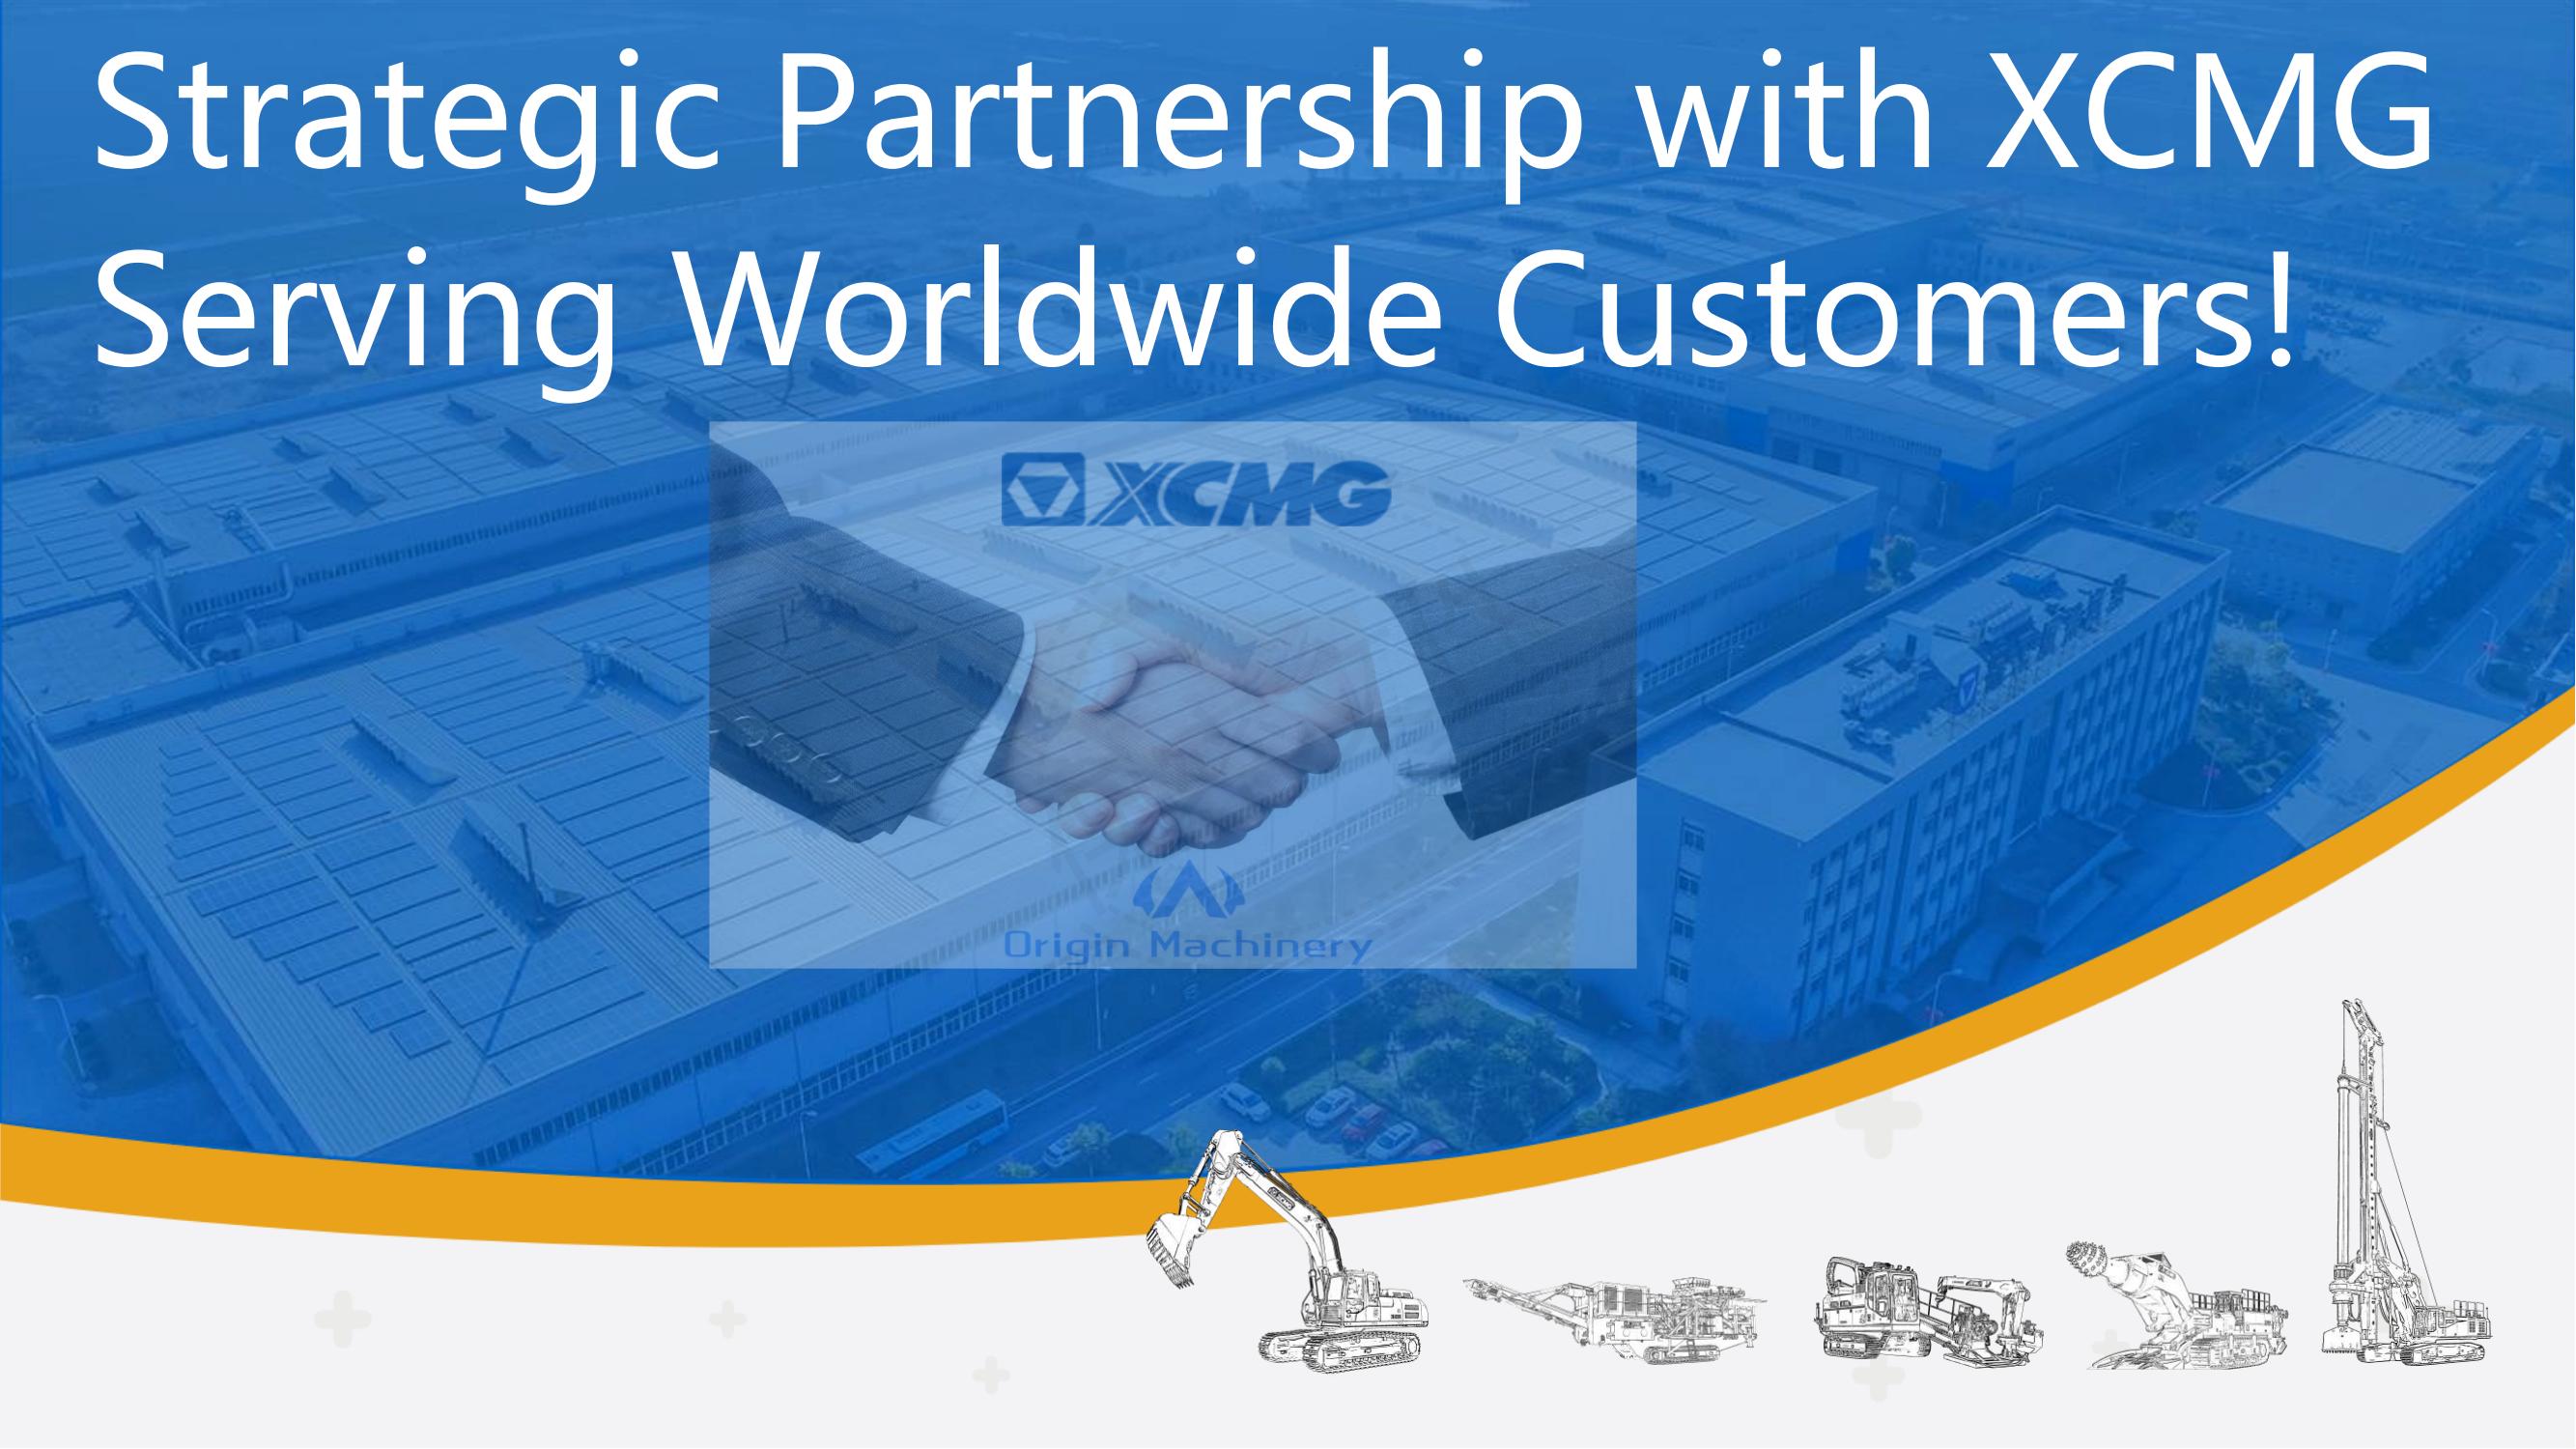 2. Strategic Partnership with XCMG